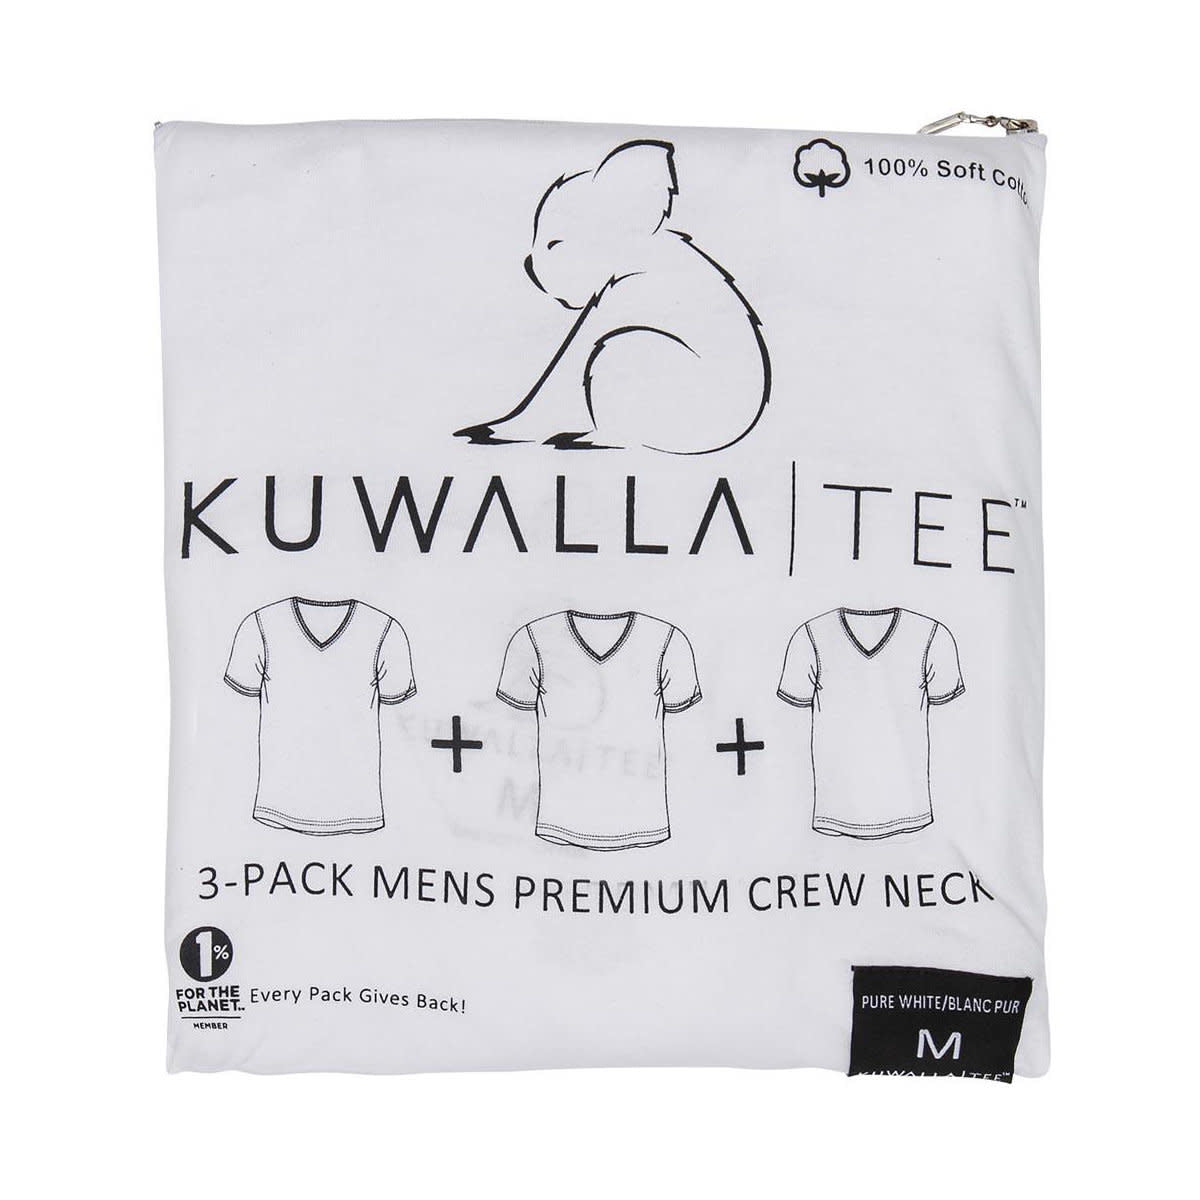 Kuwalla-Tee 3-Pack V-Neck Pure White